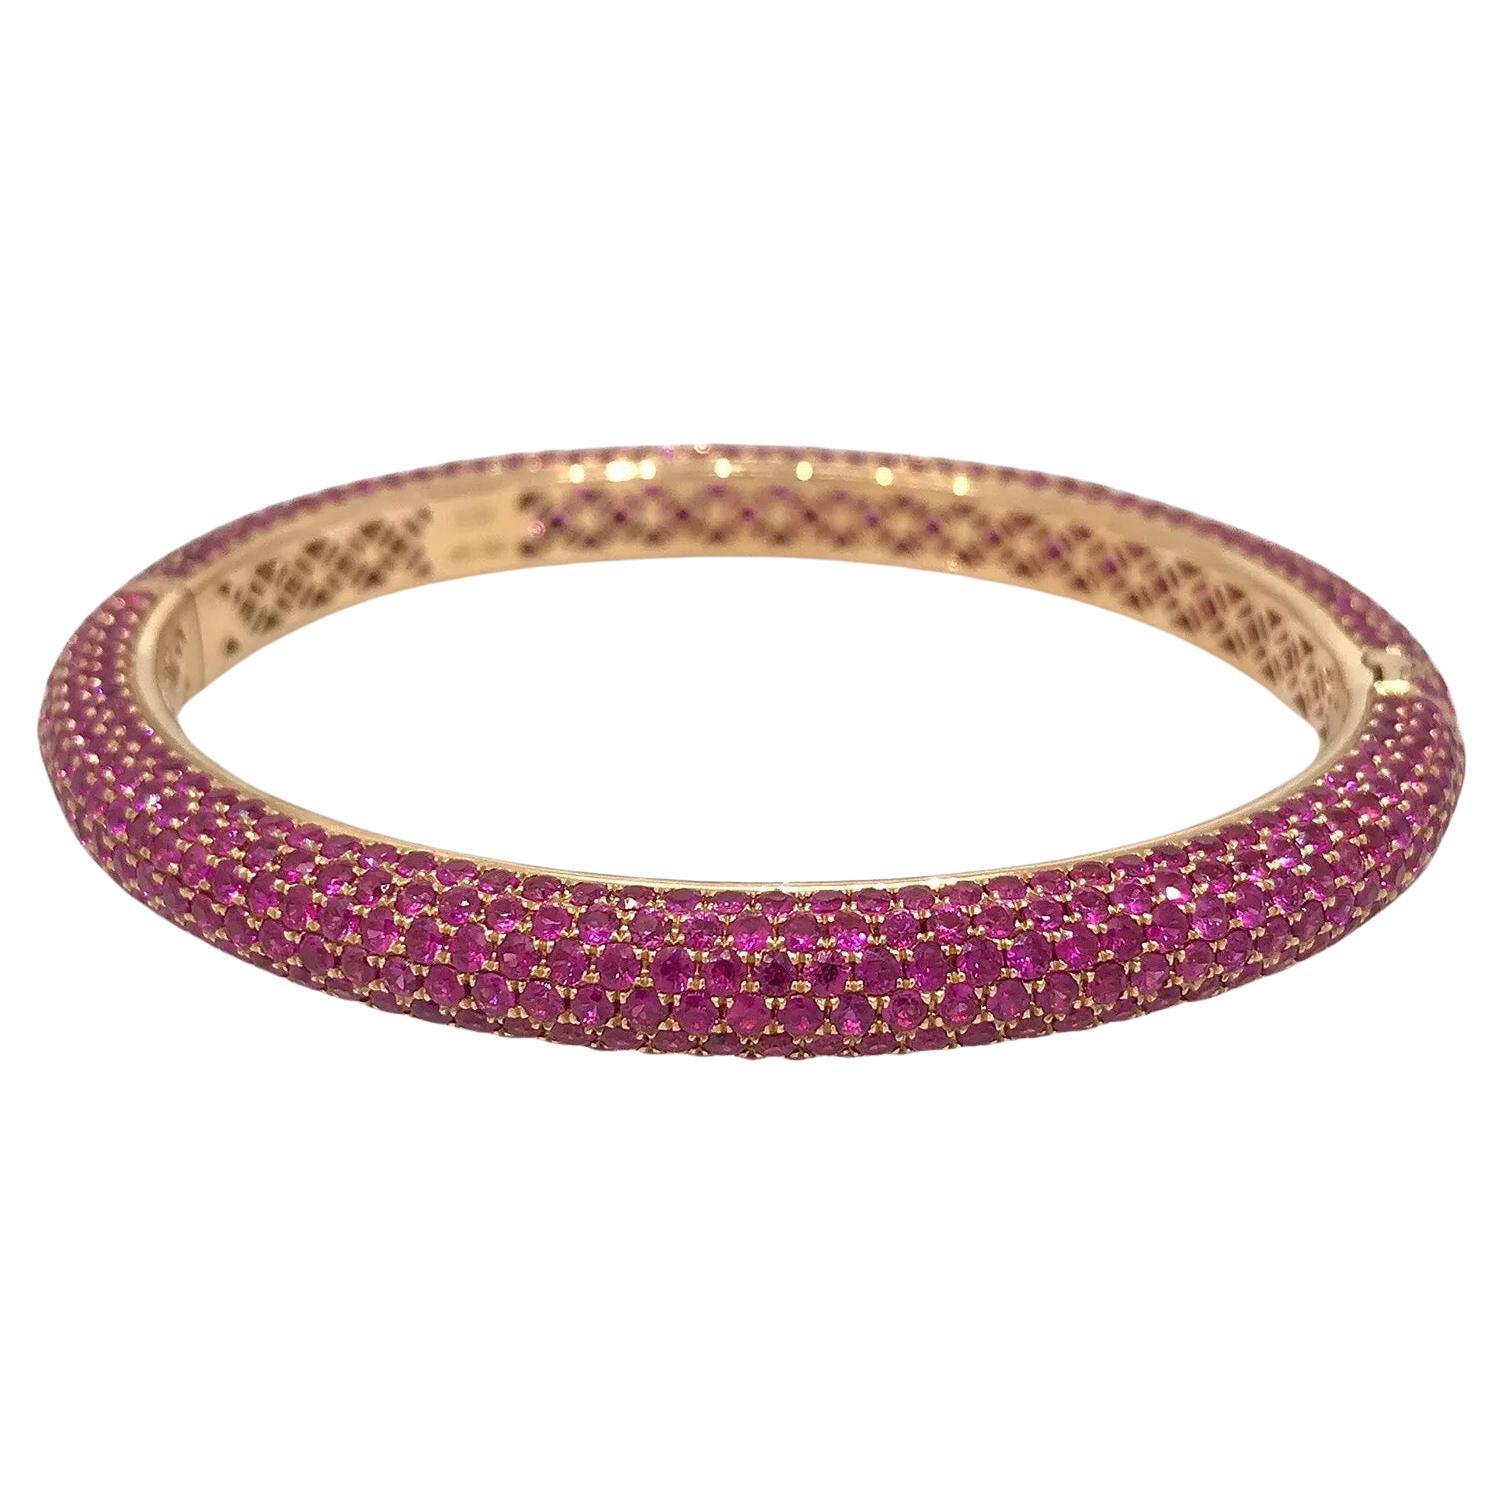 19.22 Carats Ruby Pave Bangle Bracelet in 18k Rose Gold For Sale